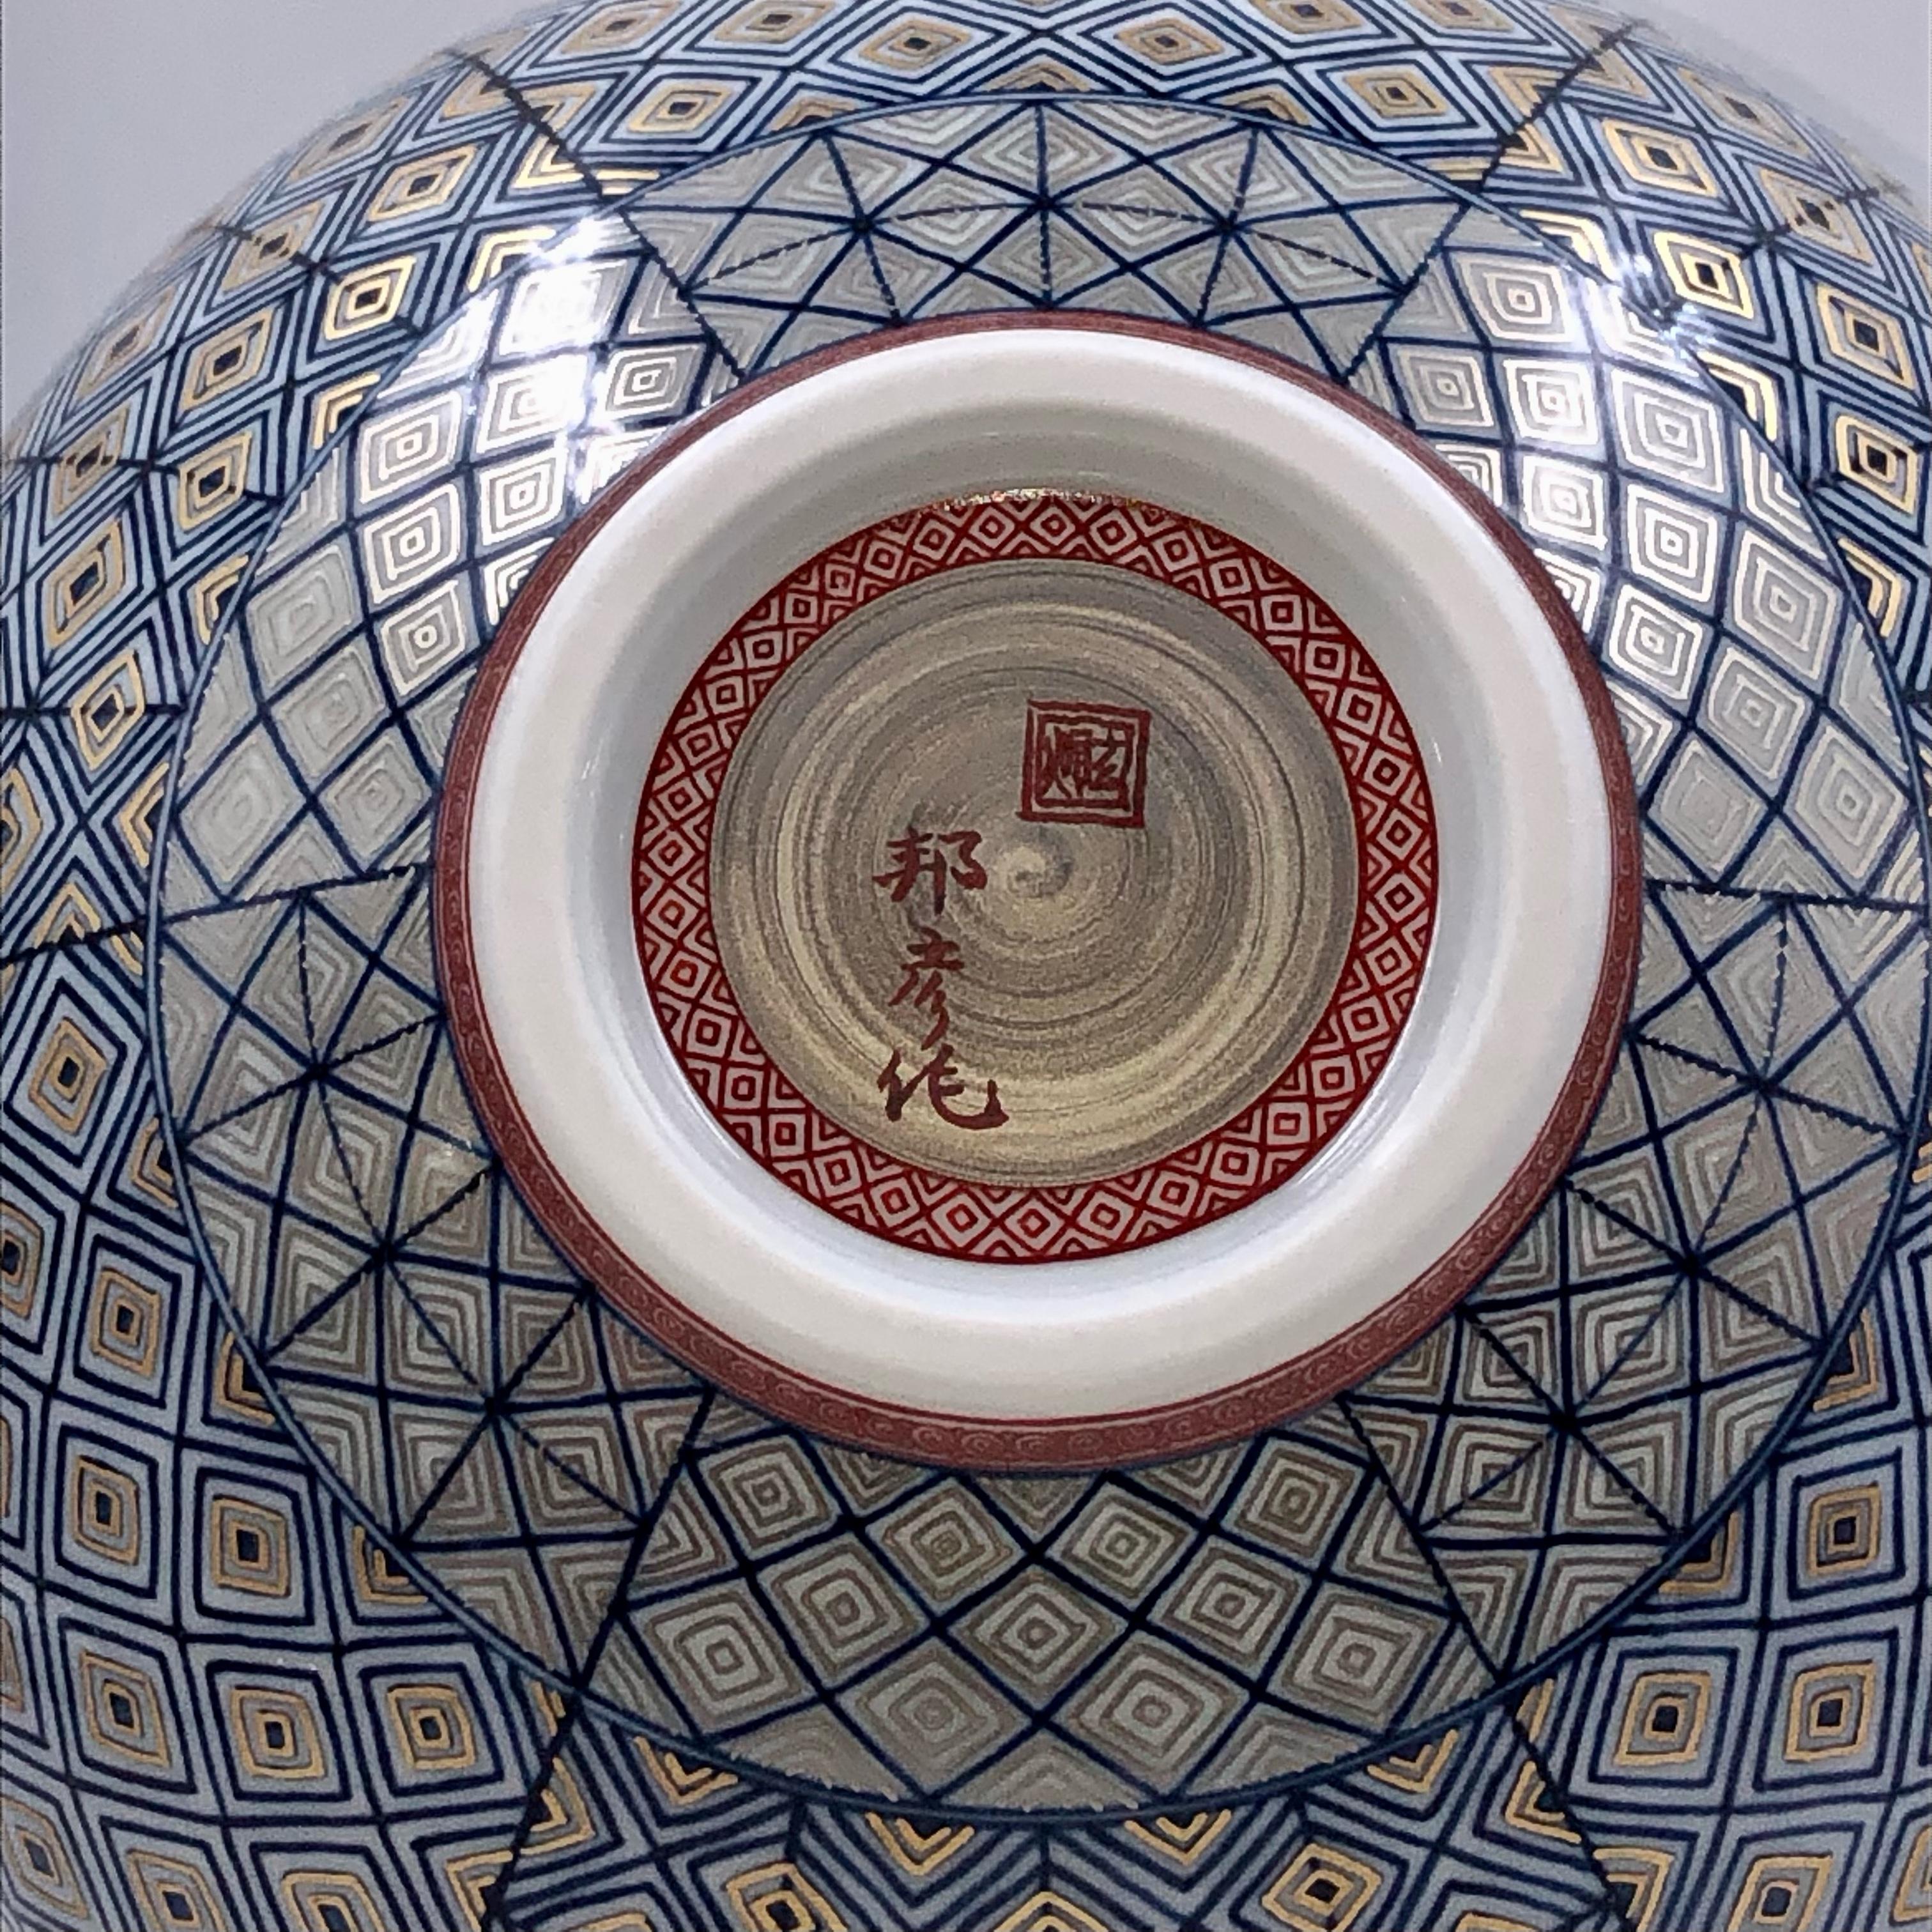 Japanese Contemporary Blue Gold White Porcelain Vase by Master Artist, 3 1